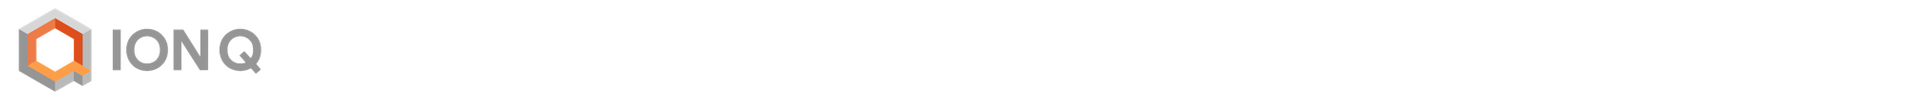 alt_text=logo of IonQ-2